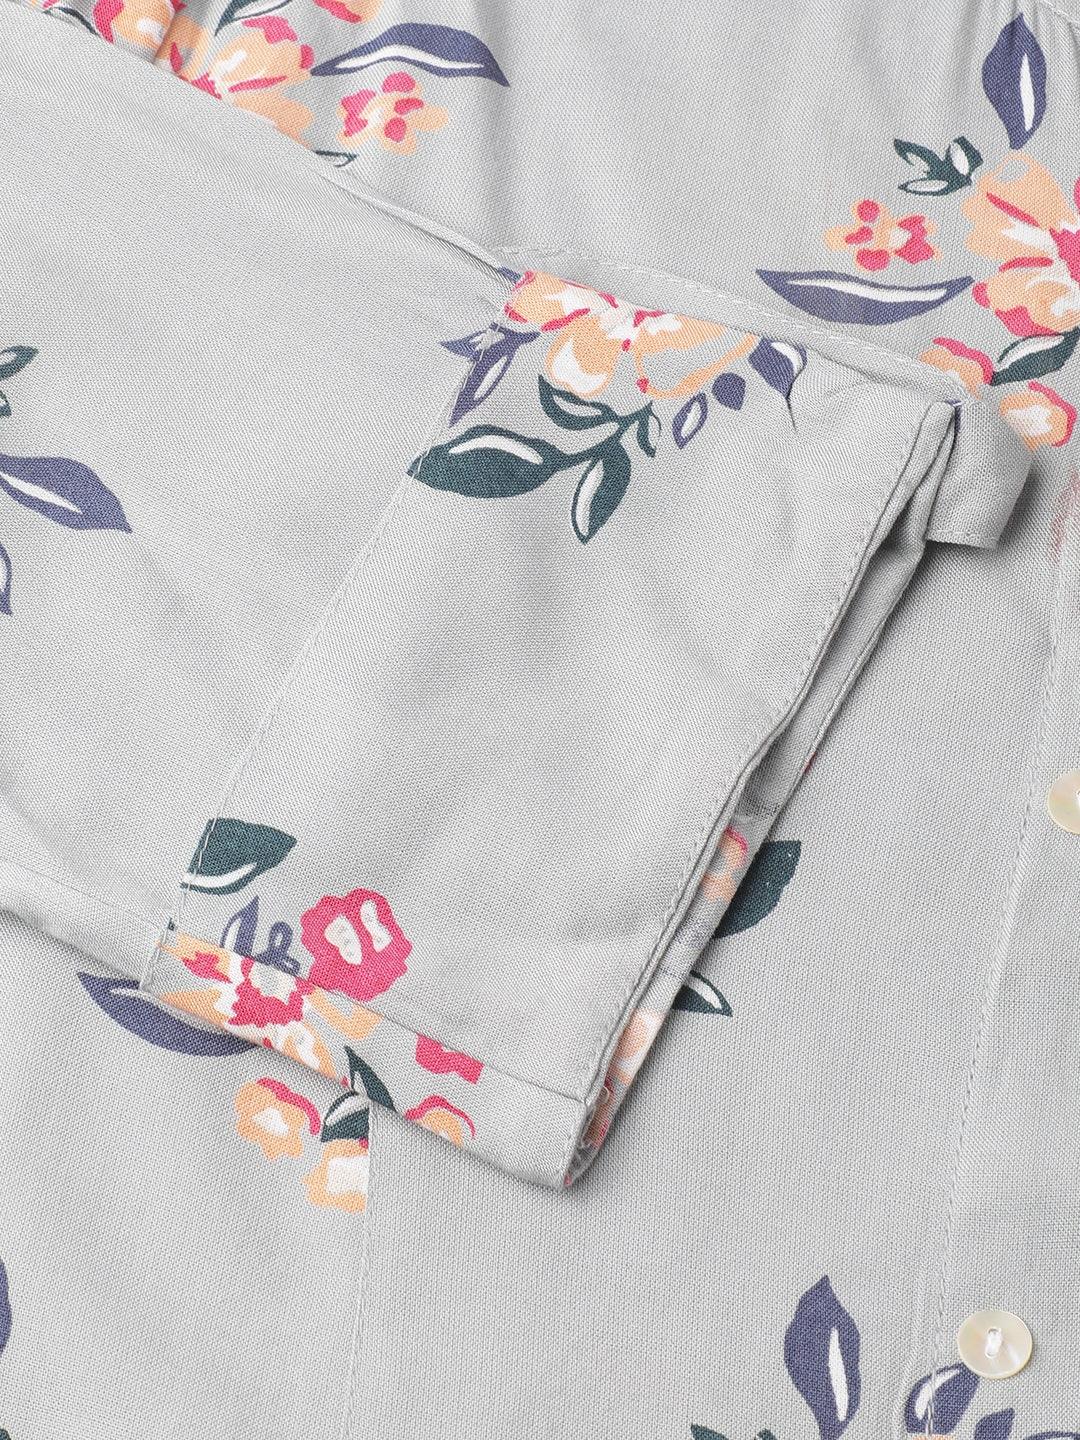 Divena Gray Floral Printed Rayon A-line Shirt Style Top - divena world